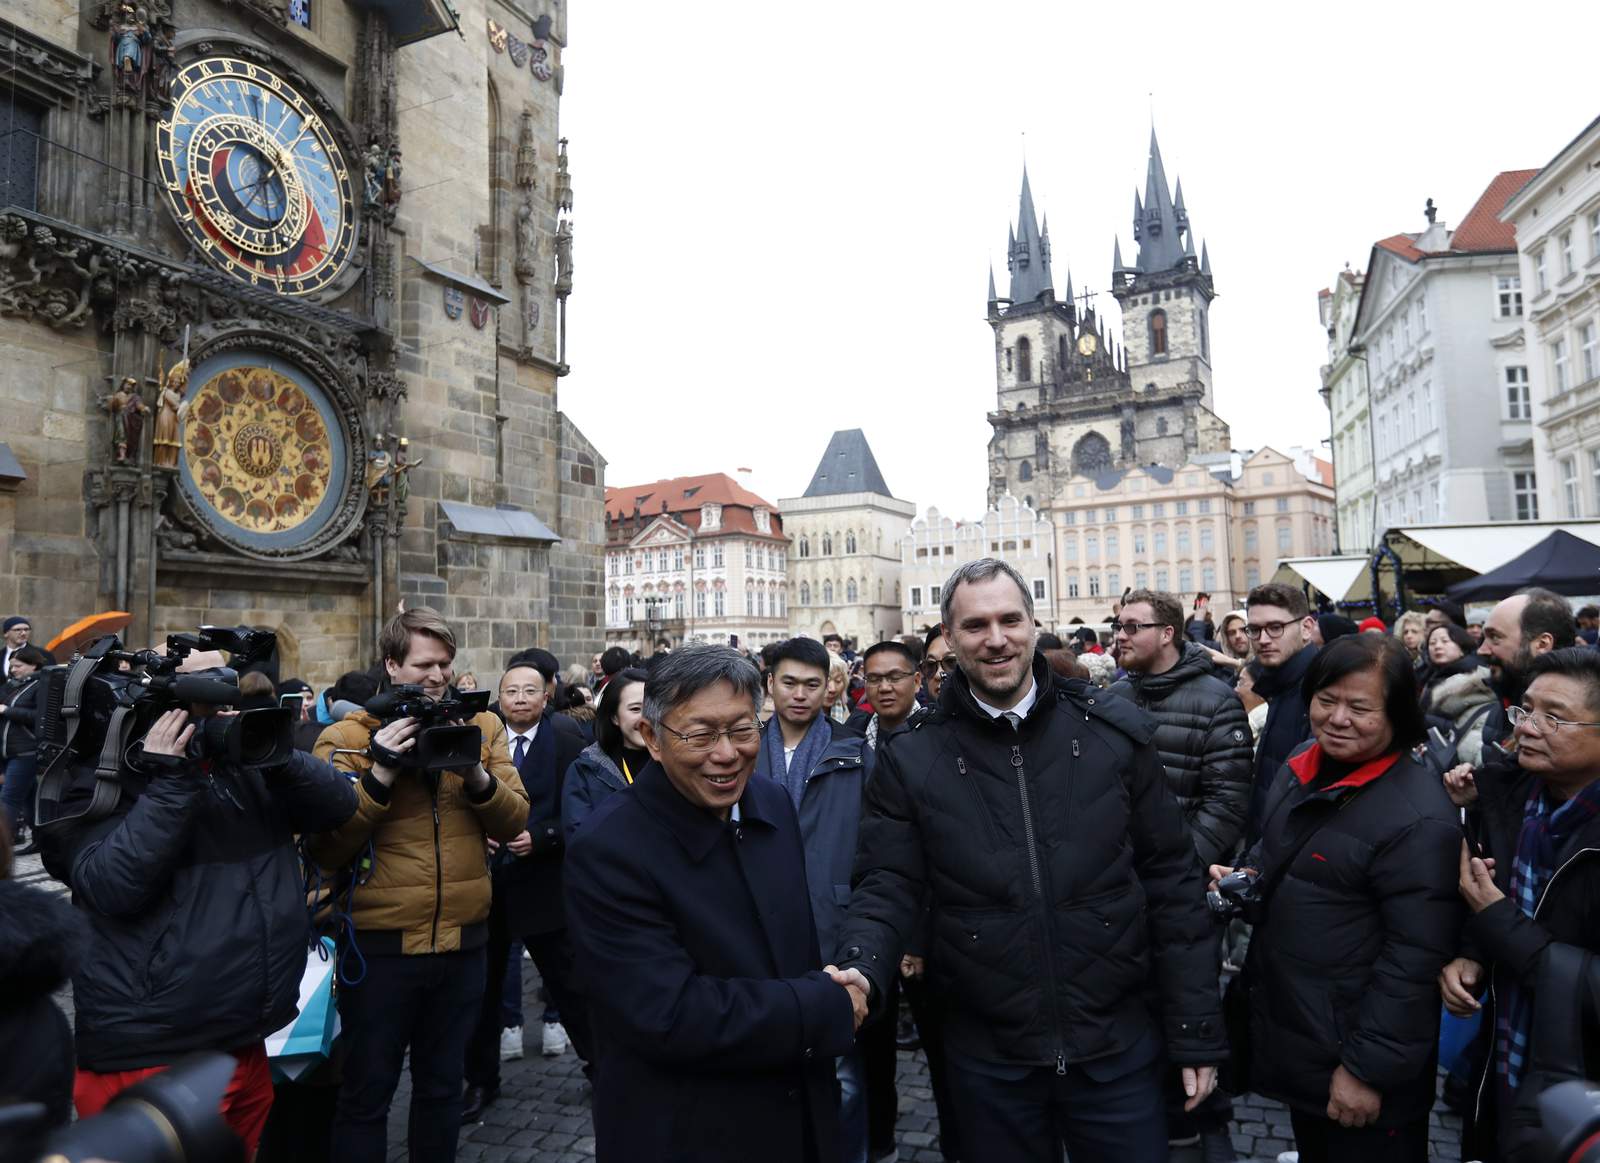 Czech Senate speaker plans to visit Taiwan, angering China